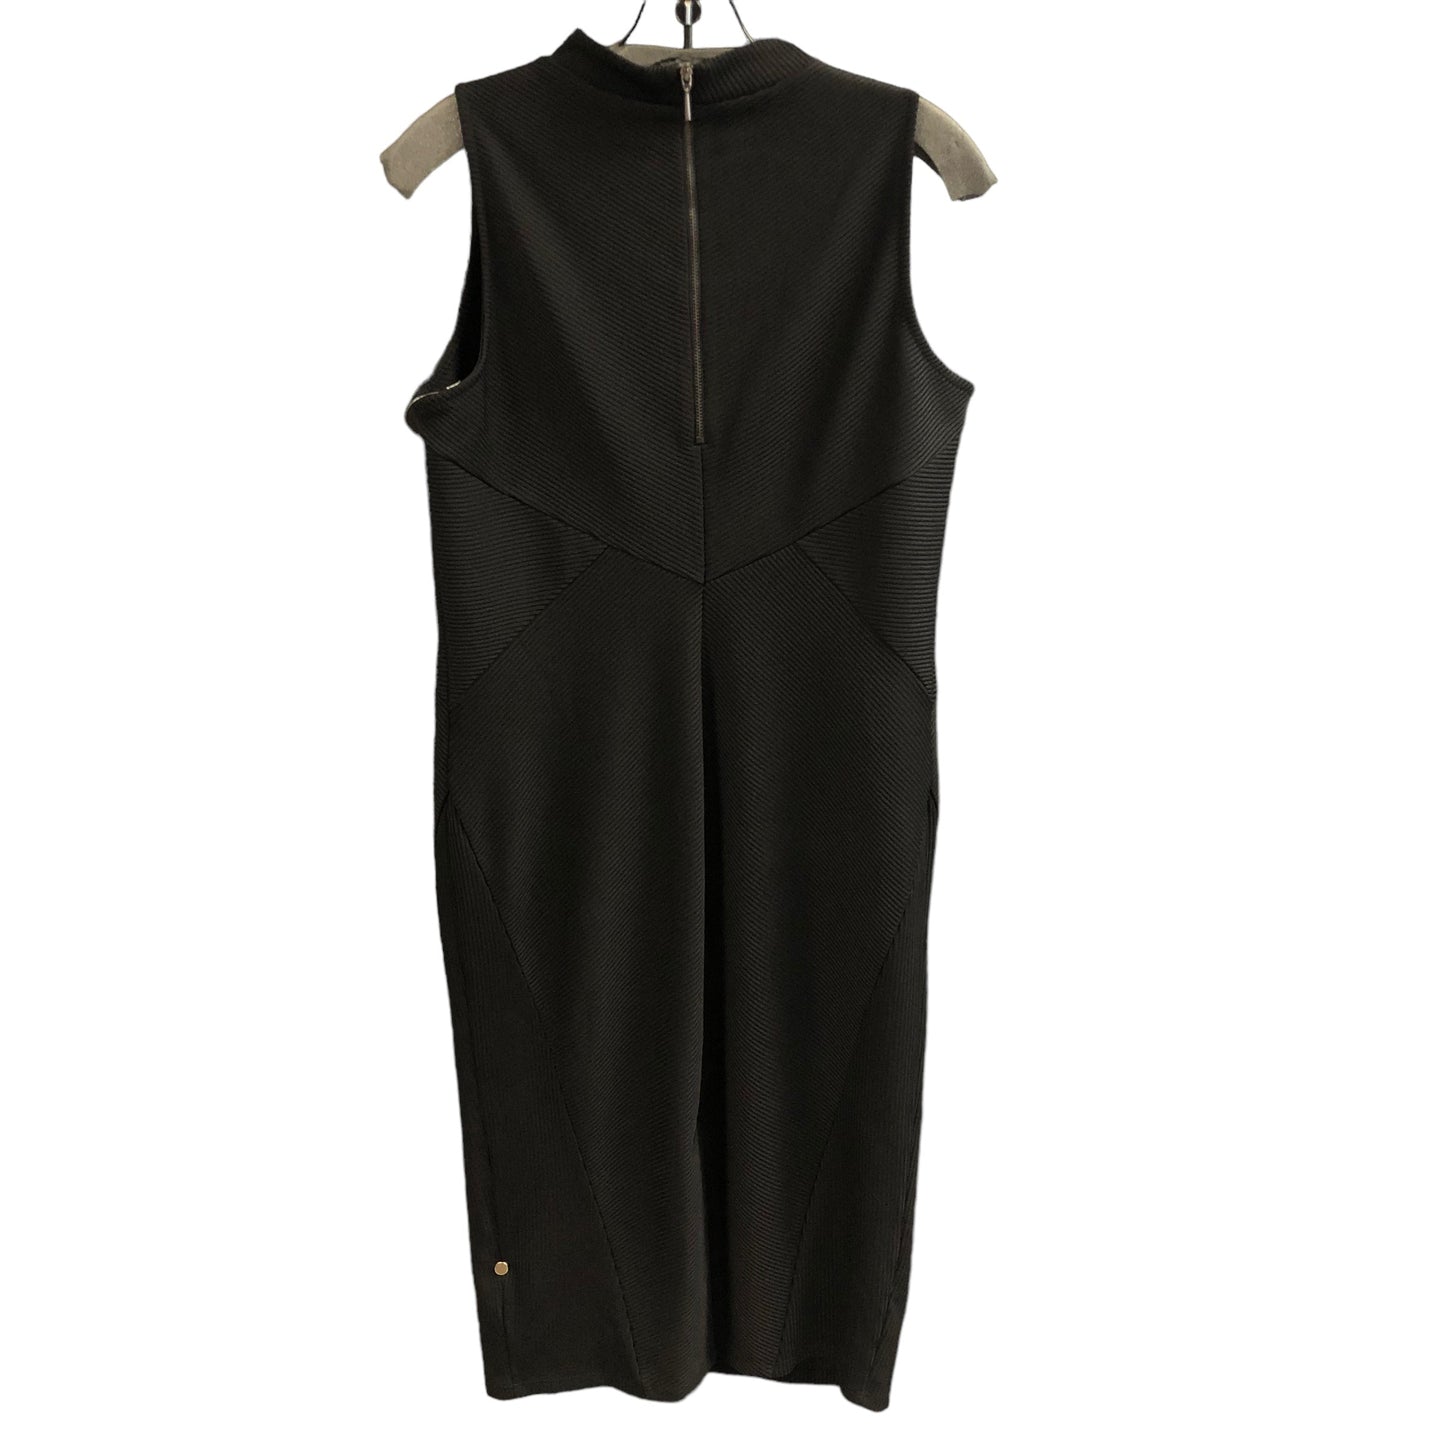 Dress Casual Maxi By Worthington  Size: 10petite